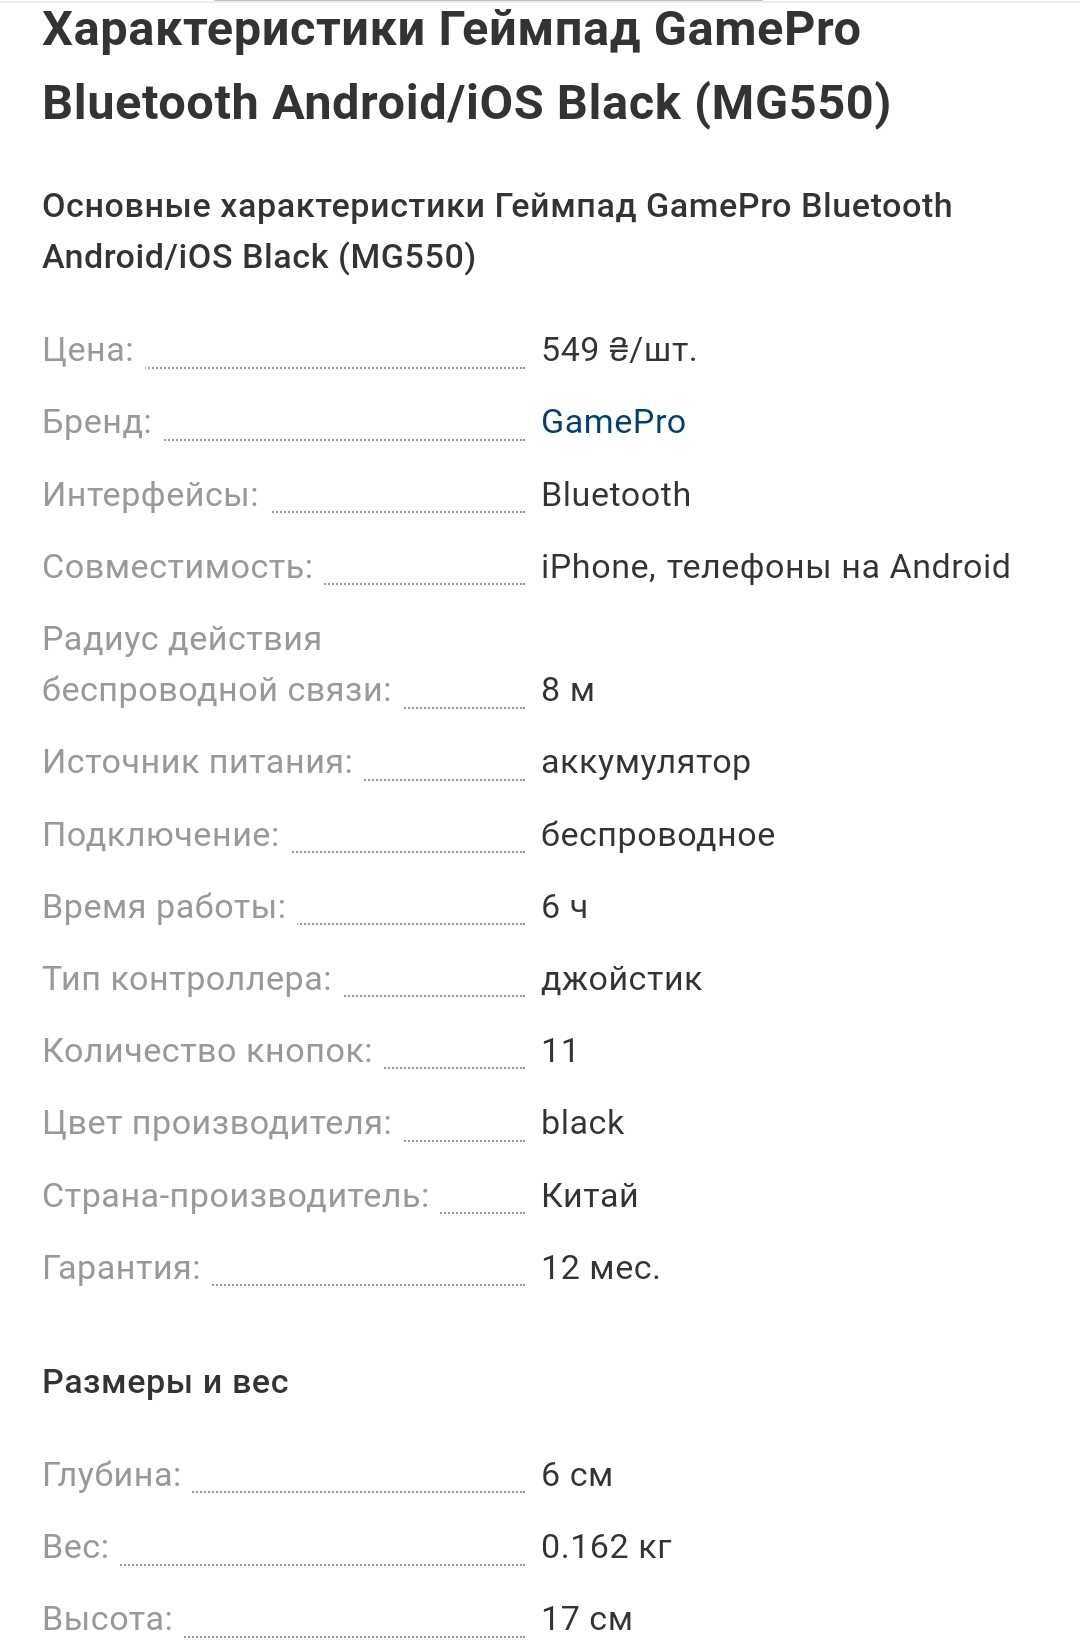 Геймпад GamePro Bluetooth Android/iOS Black (MG550)